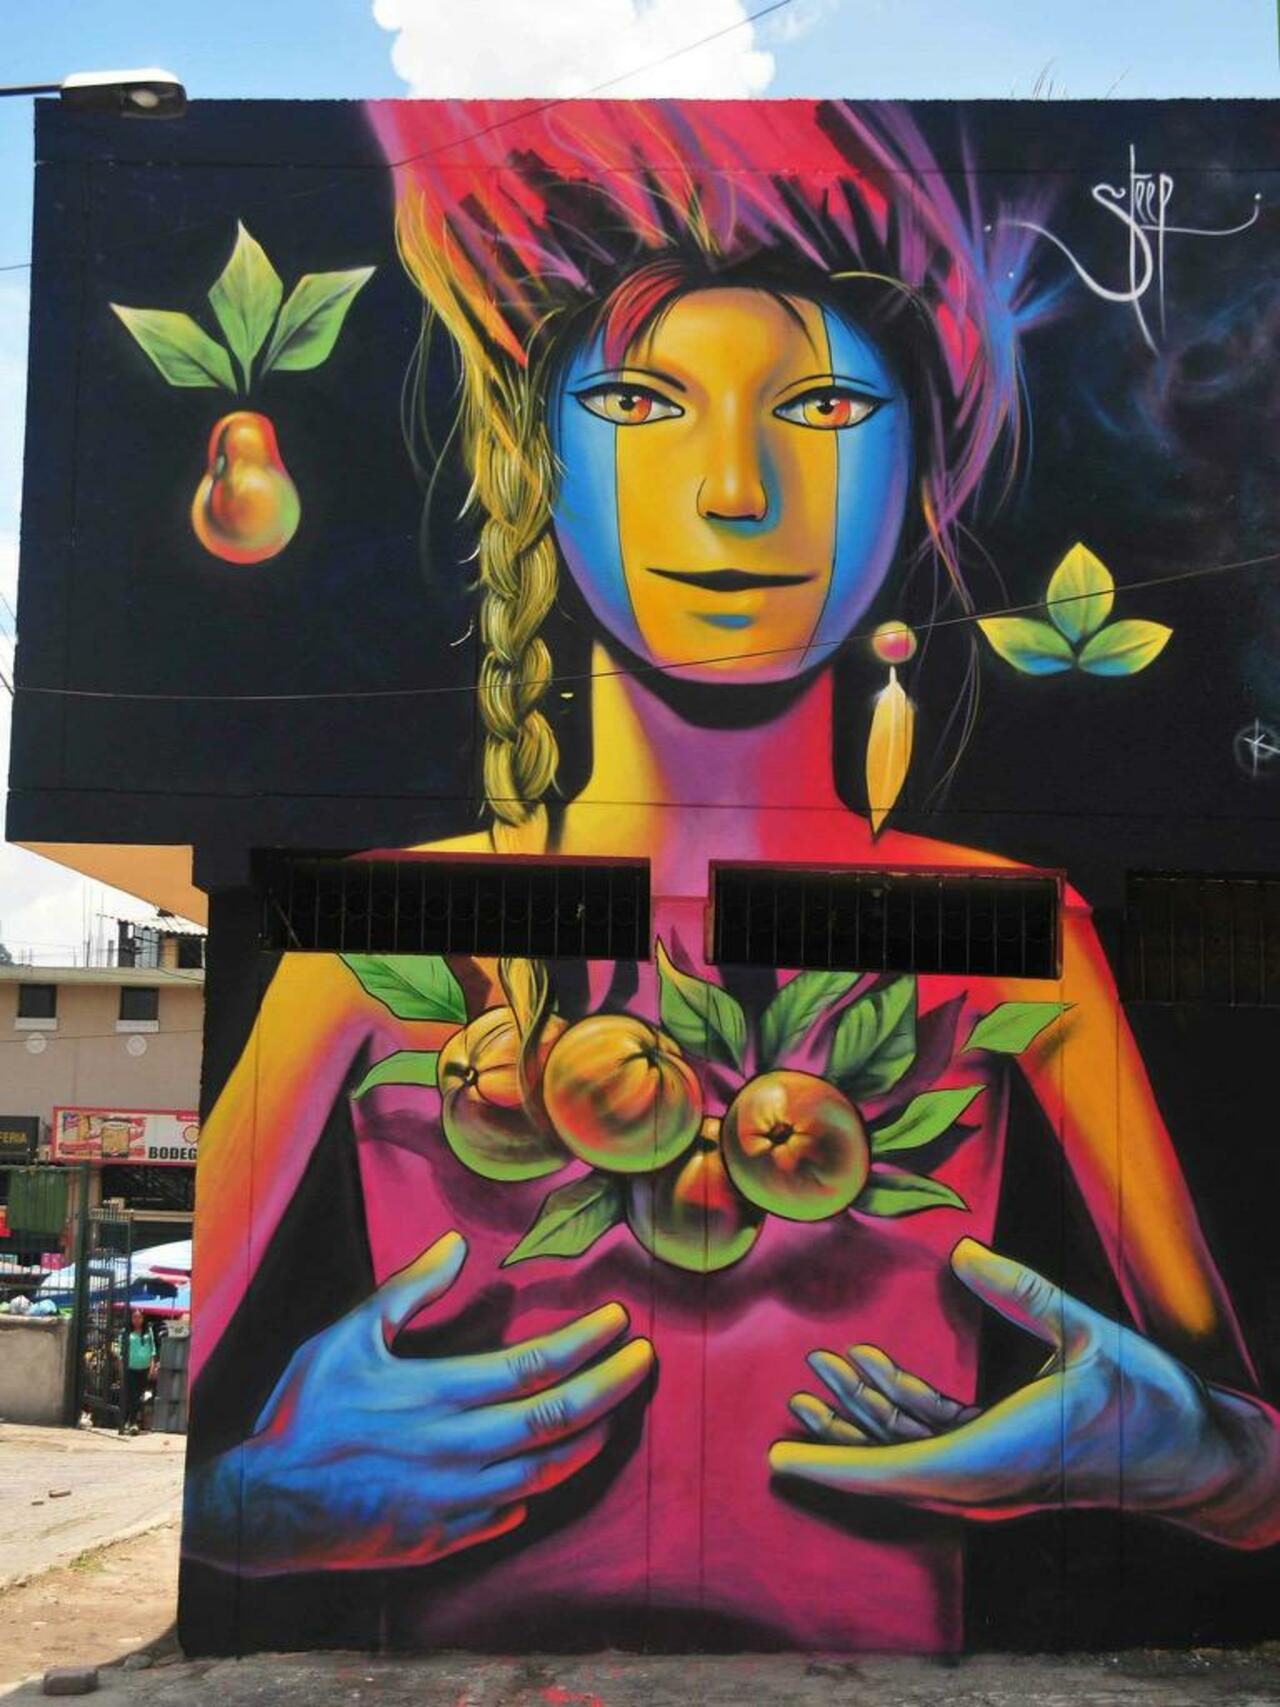 Street Art by Steep #art #graffiti #mural #streetart http://t.co/dKGIfl0HiR http://twitter.com/GoogleStreetArt/status/652717552435638272/photo/1/large?utm_source=fb&utm_medium=fb&utm_campaign=charlesjackso14&utm_content=652720469402103808 … … … http://twitter.com/GoogleStreetArt/status/652717552435638272/photo/1/large?utm_source=fb&utm_medium=fb&utm_campaign=charlesjackso14&utm_content=652732444123267072